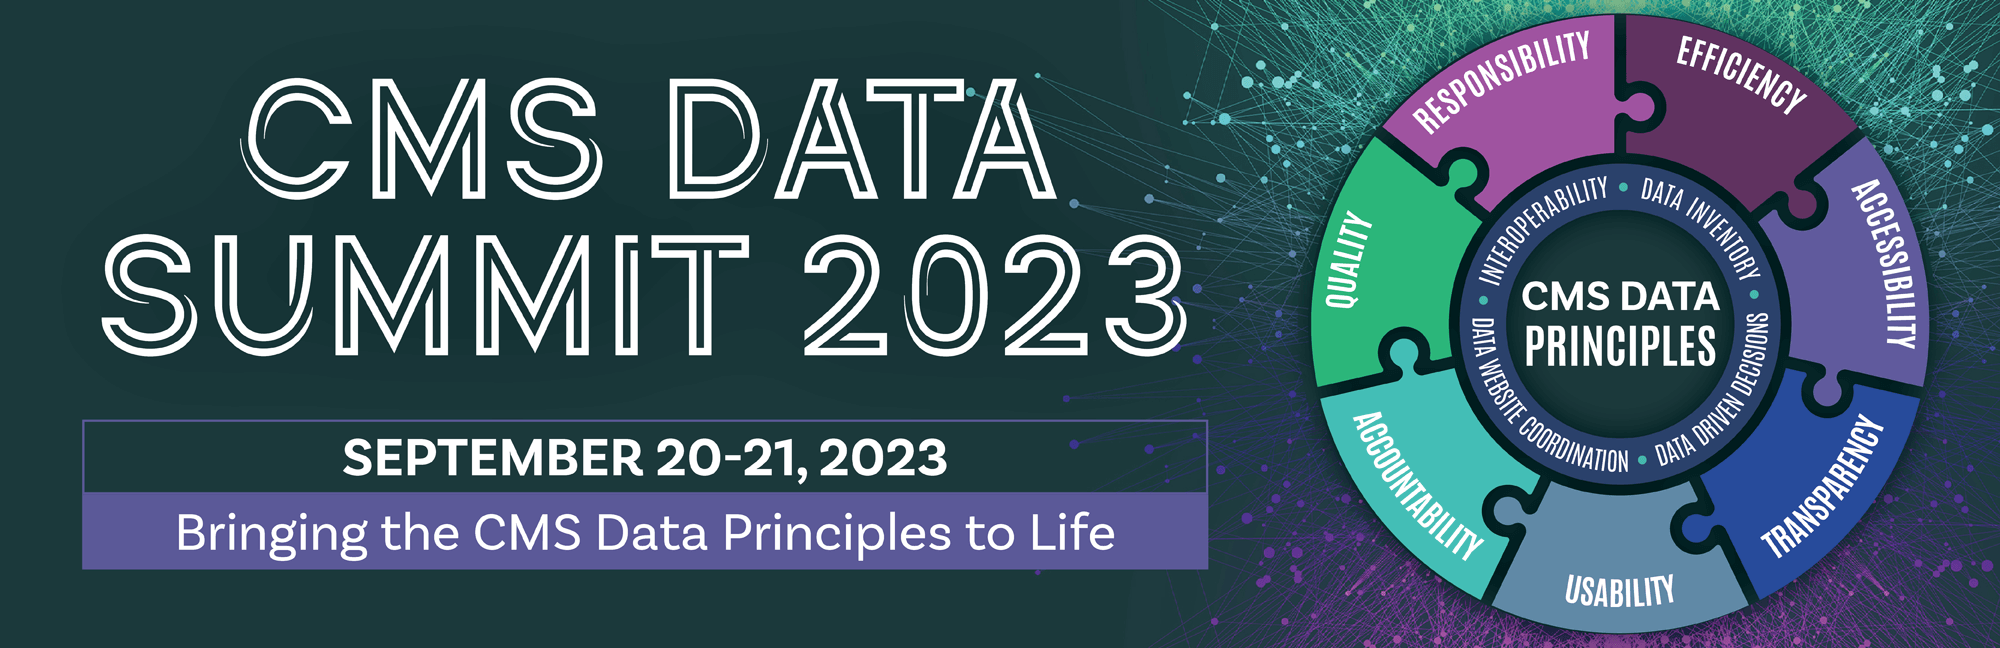 CMS Data Summit 2023